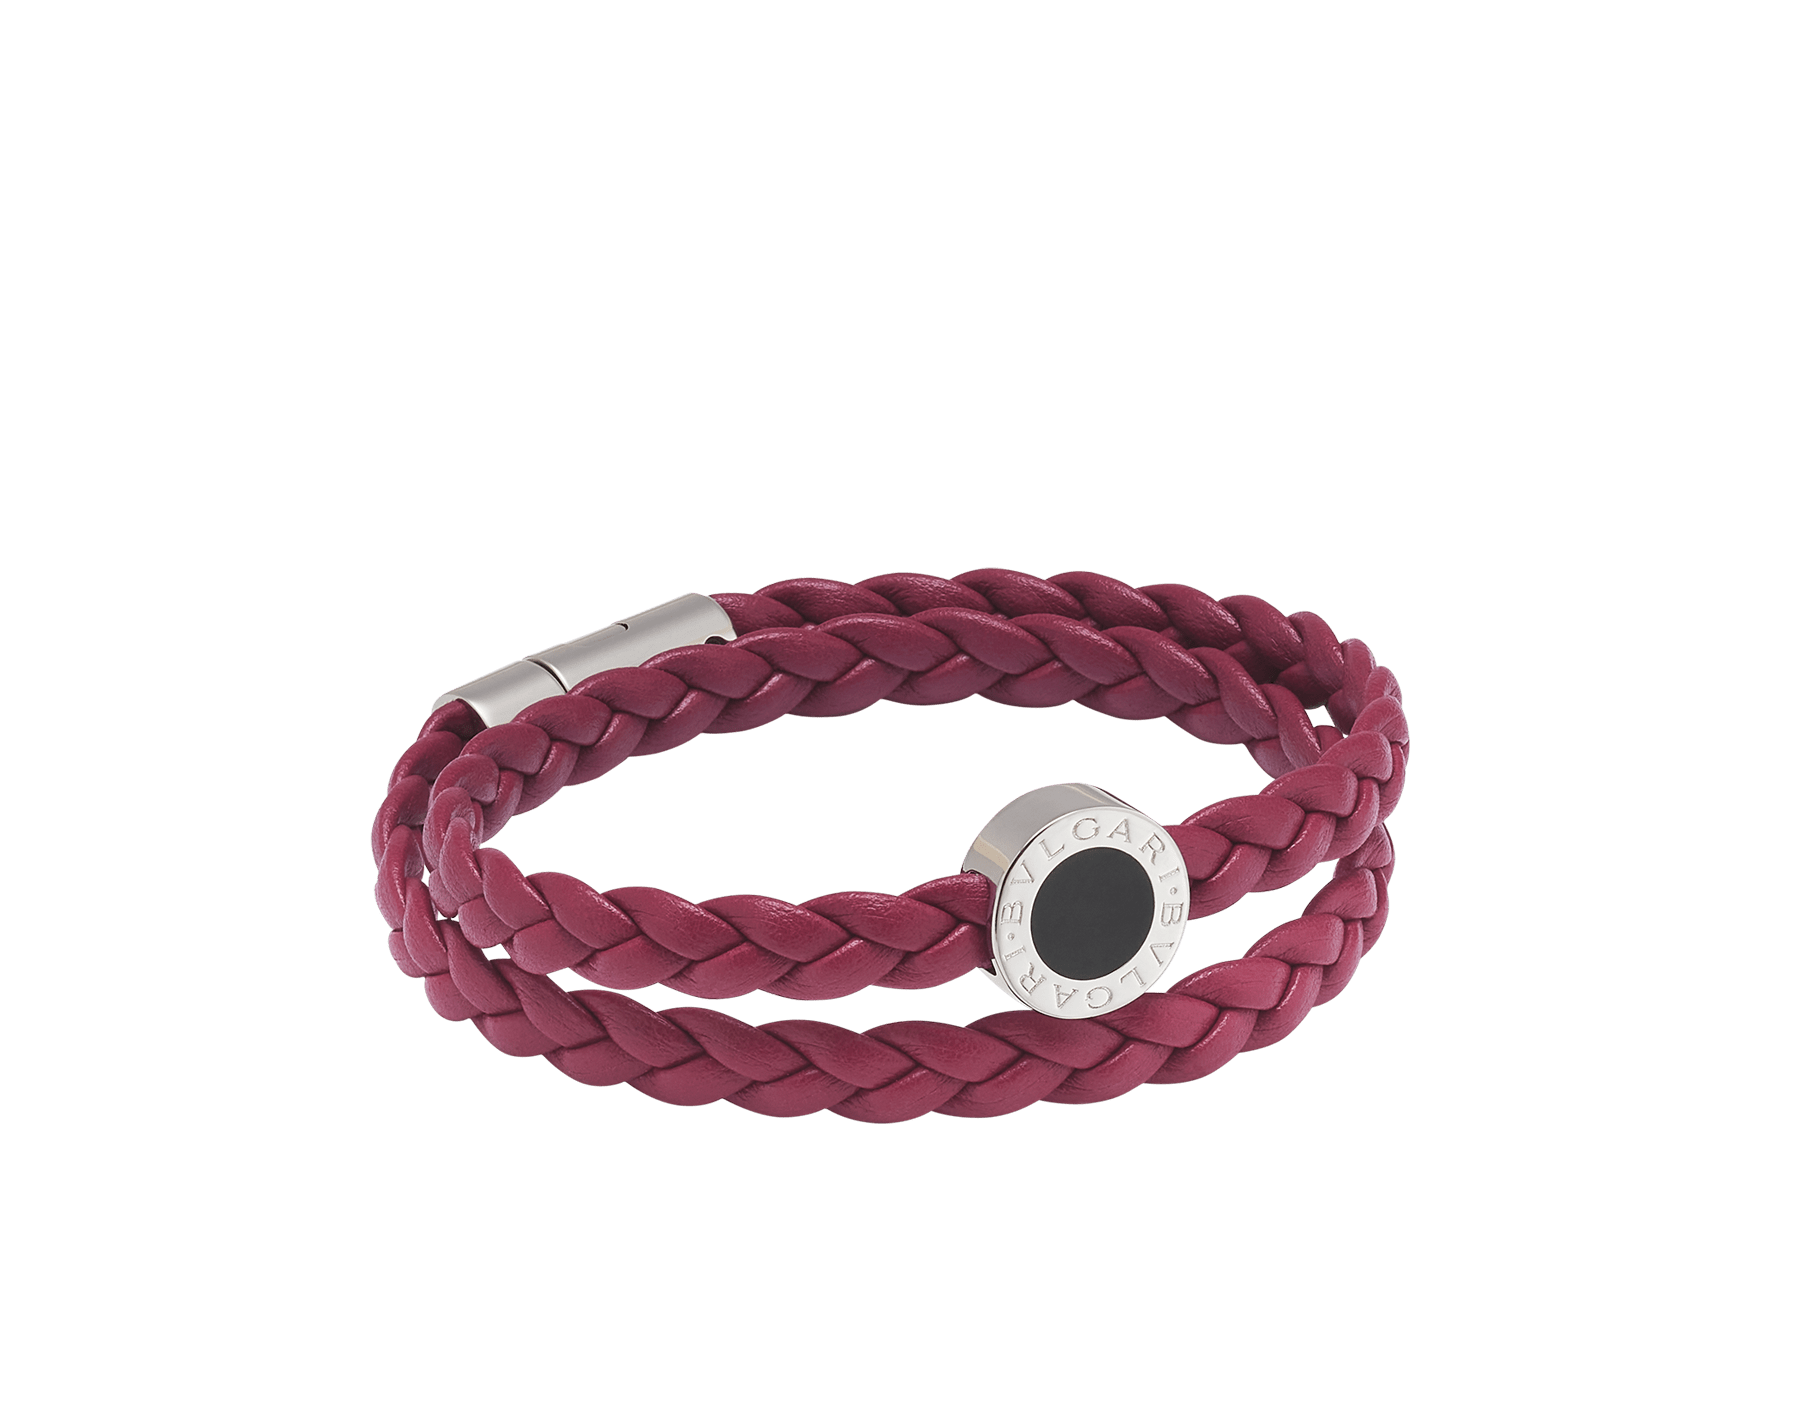 BULGARI BULGARI Man bracelet in anemone spinel pinkish red braided calf leather with palladium-plated brass clasp closure. Iconic embellishment in palladium-plated brass embellished with matte black enamel. LOGOBRAID-WCL-AS image 1